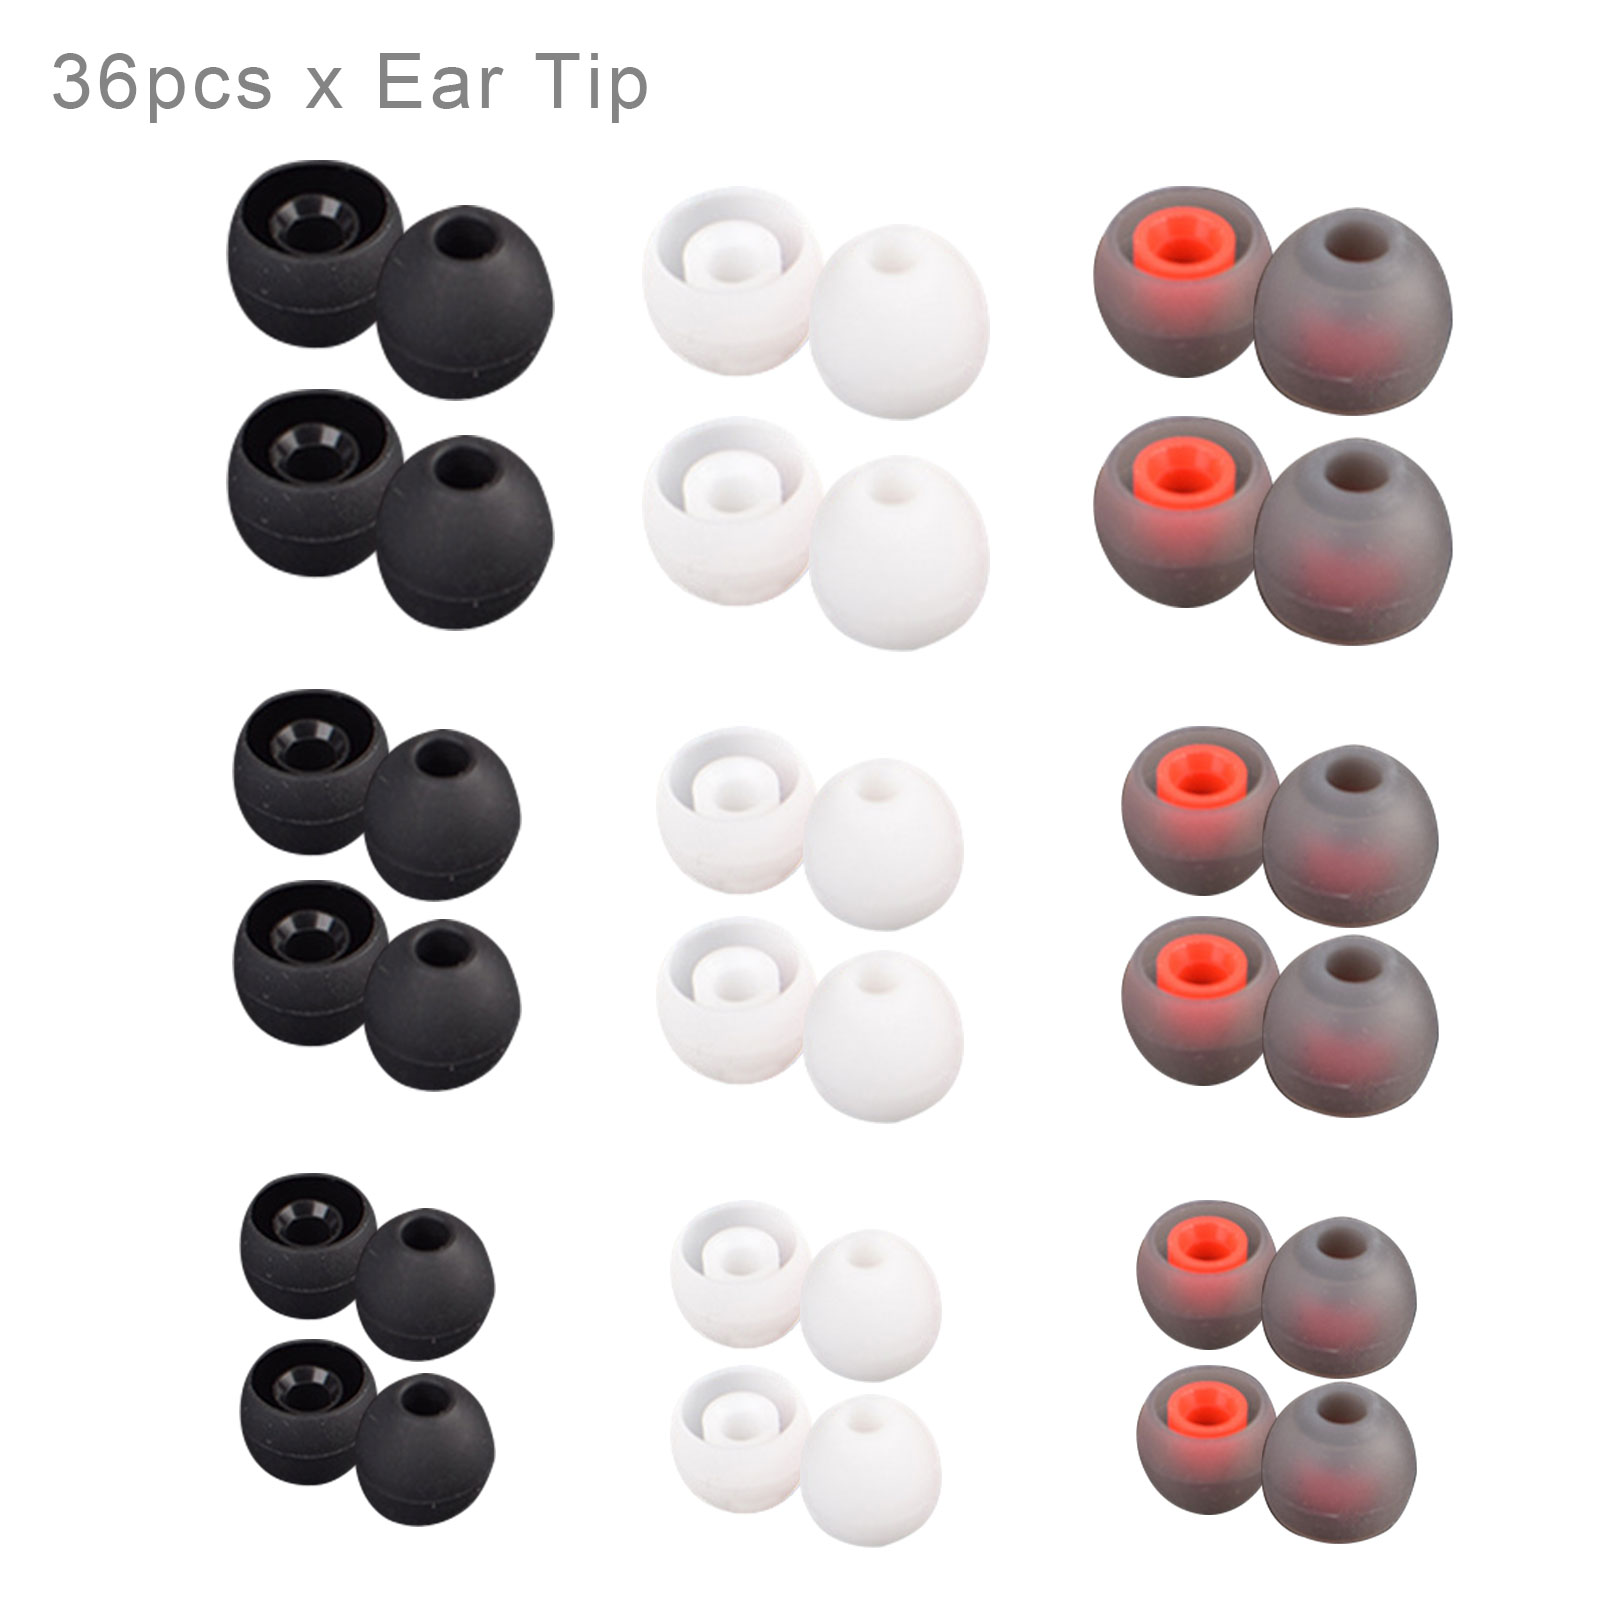 36pcs Flexible Non Slip Soft Silicone Ear Tip Headphone Earbud Noise Isolation